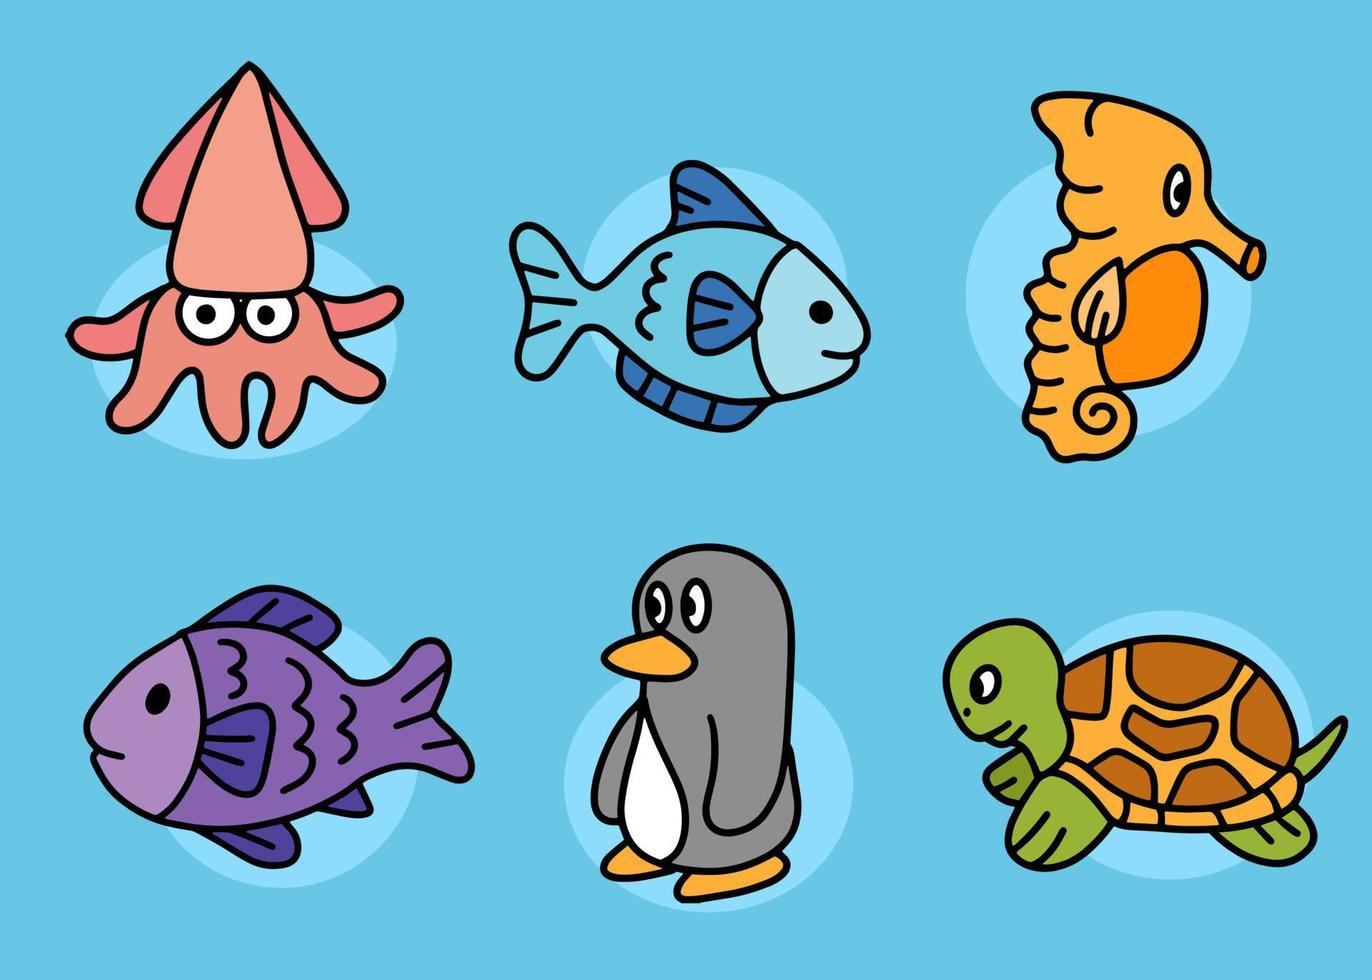 ensemble animal mignon poisson de mer océan dessin animé poisson, hippocampe, crabe, tortue, pingouin, calmar, illustration de la collection de poissons poulpes vecteur